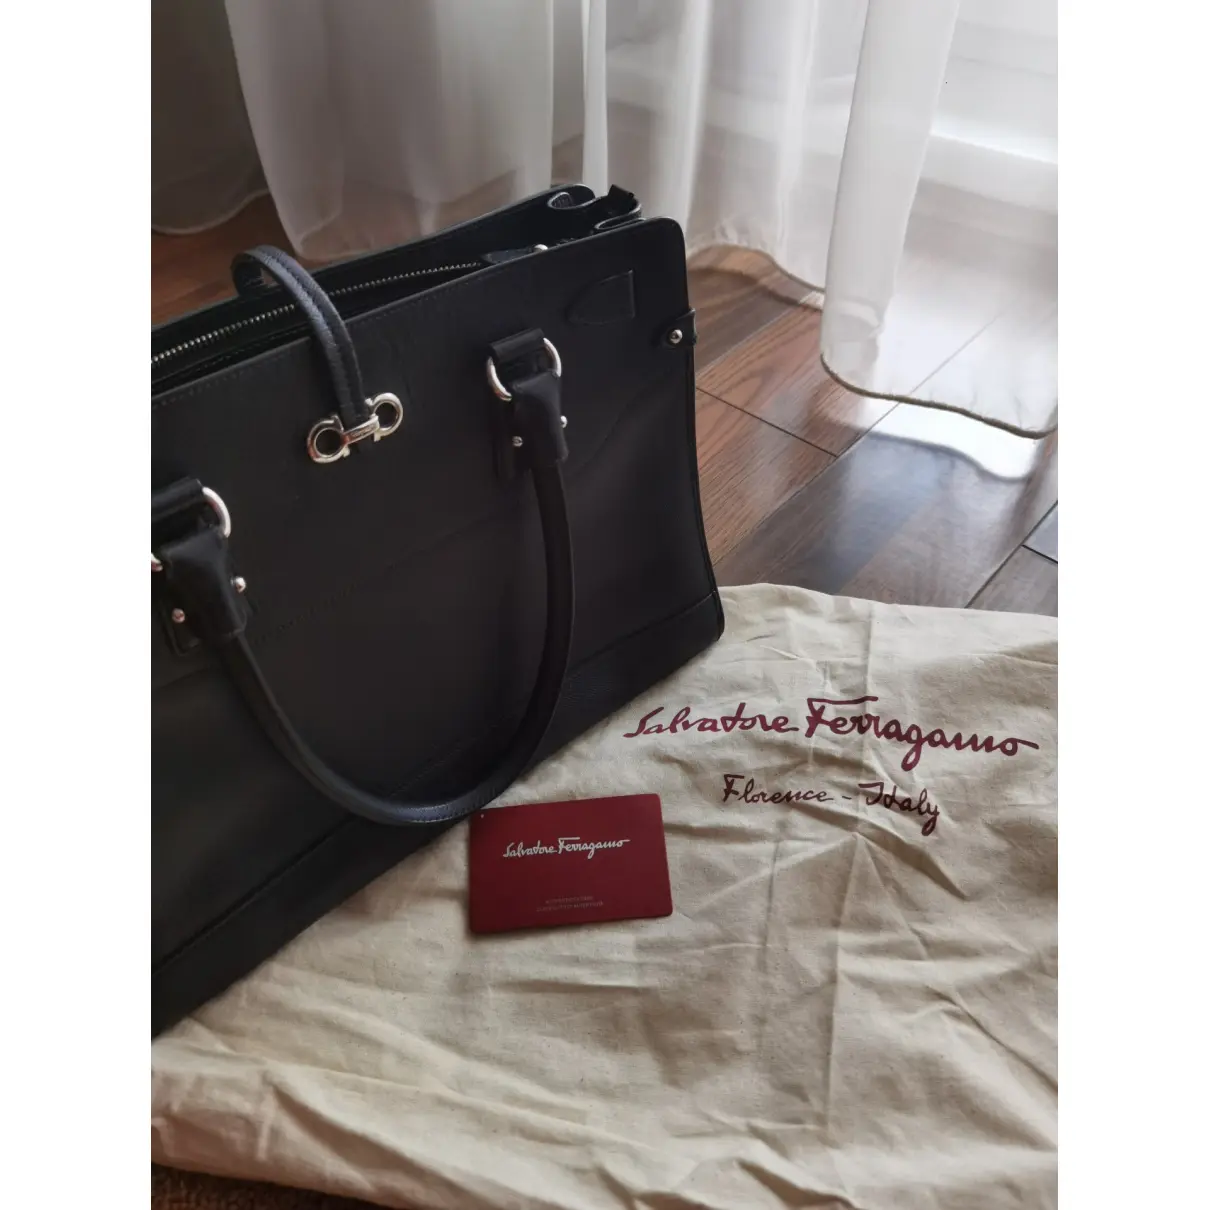 Buy Salvatore Ferragamo Sofia leather handbag online